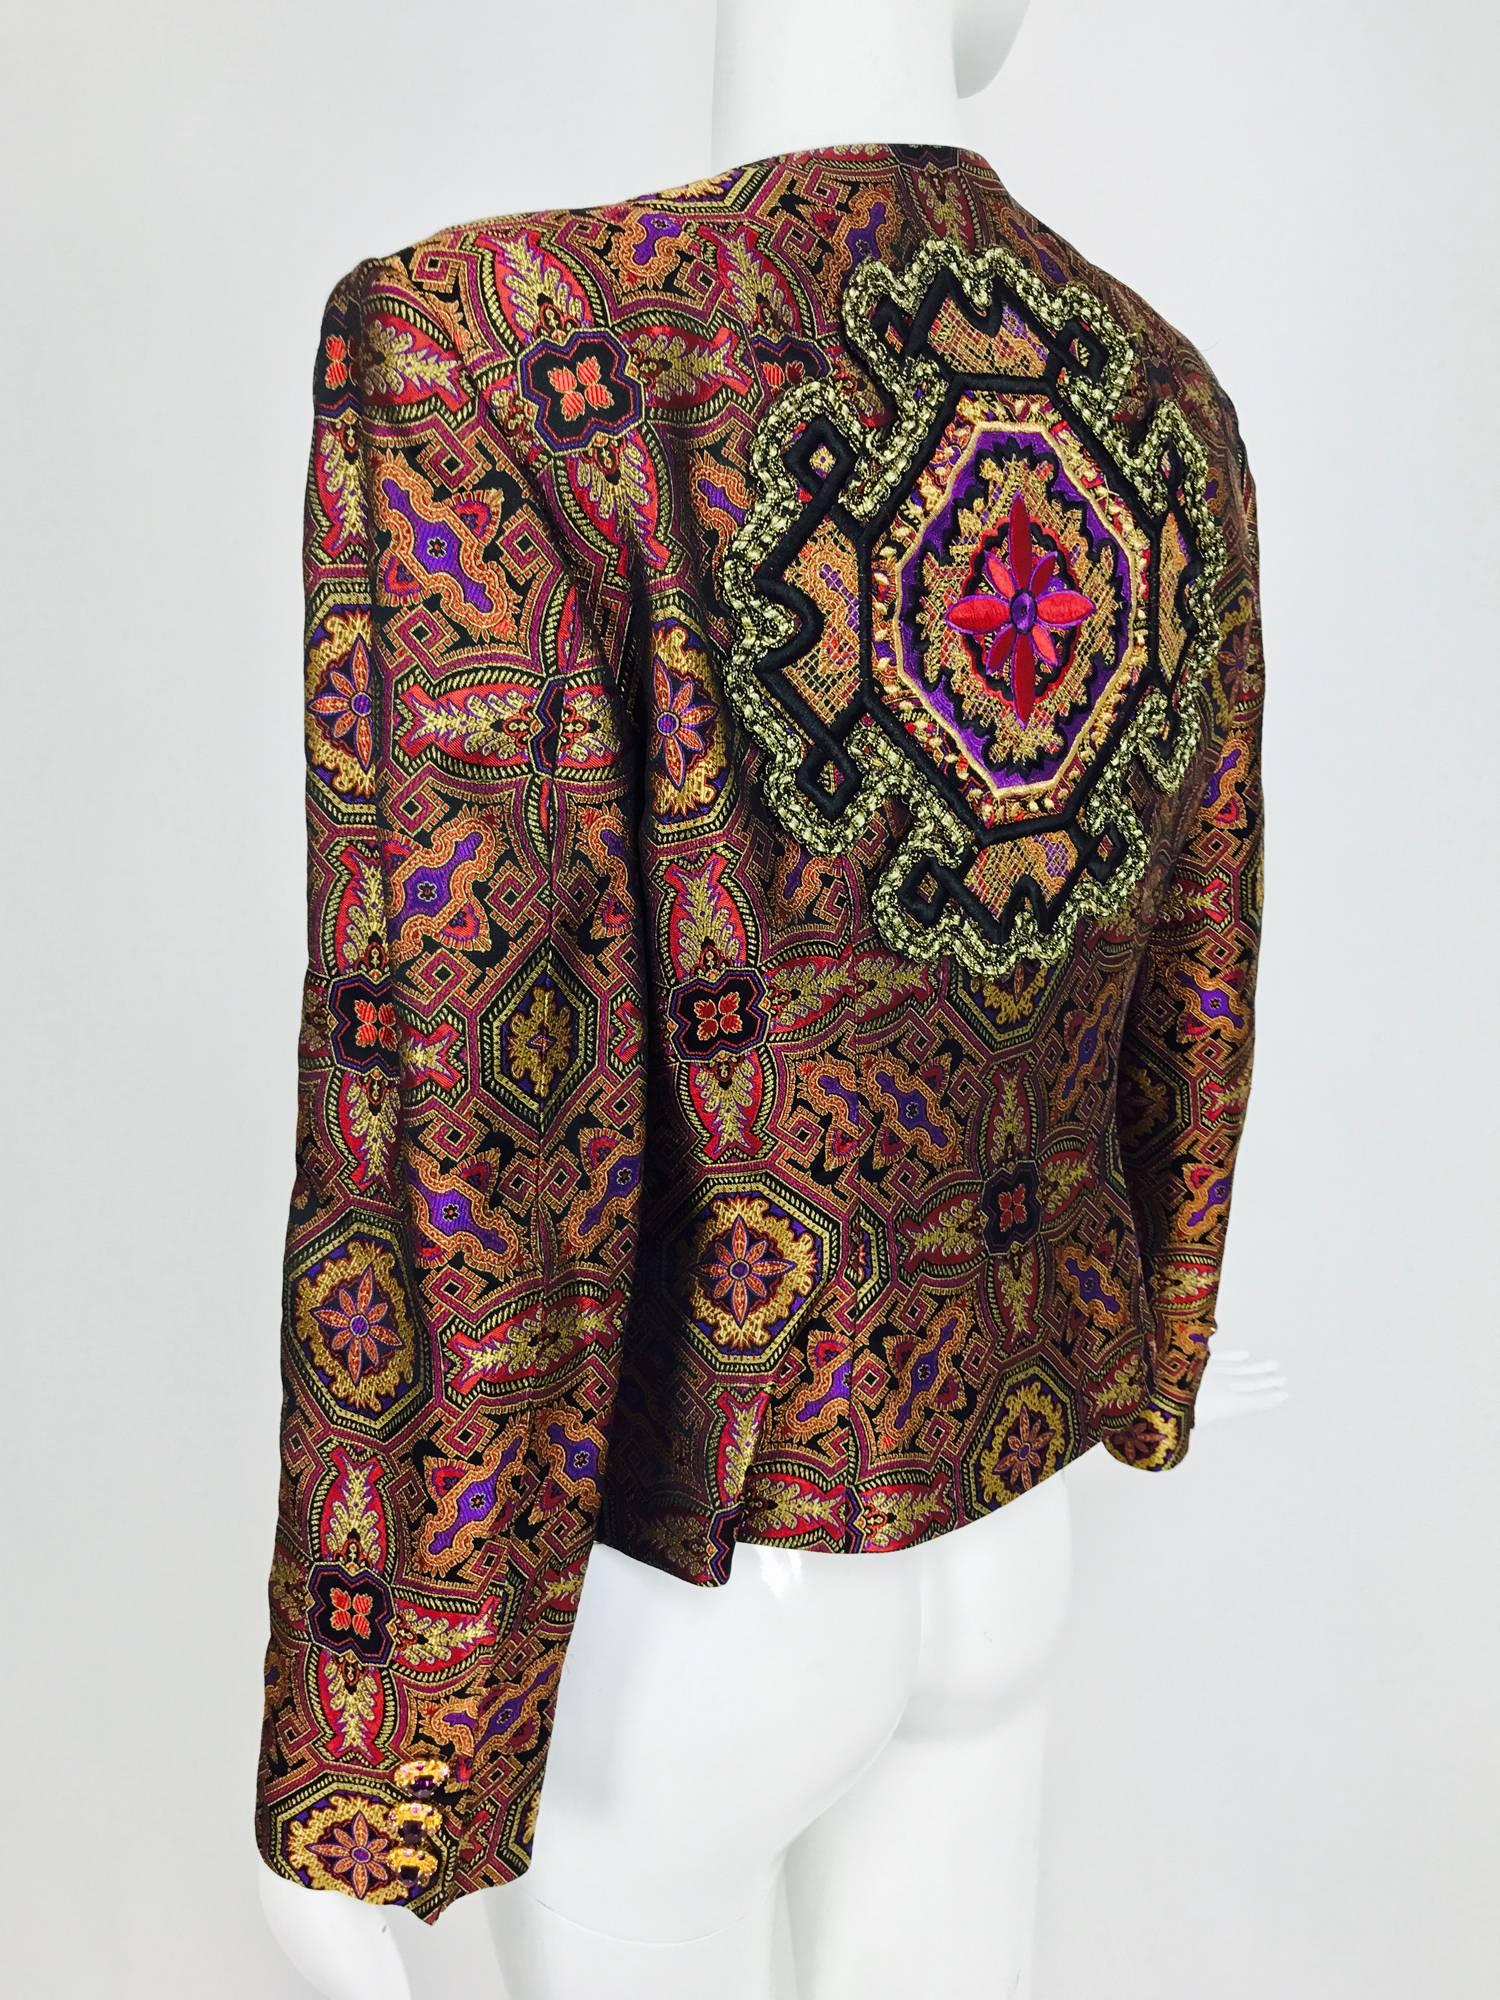 Vintage Christian LaCroix jewel tone brocade jacket jewel buttons 1980s 1